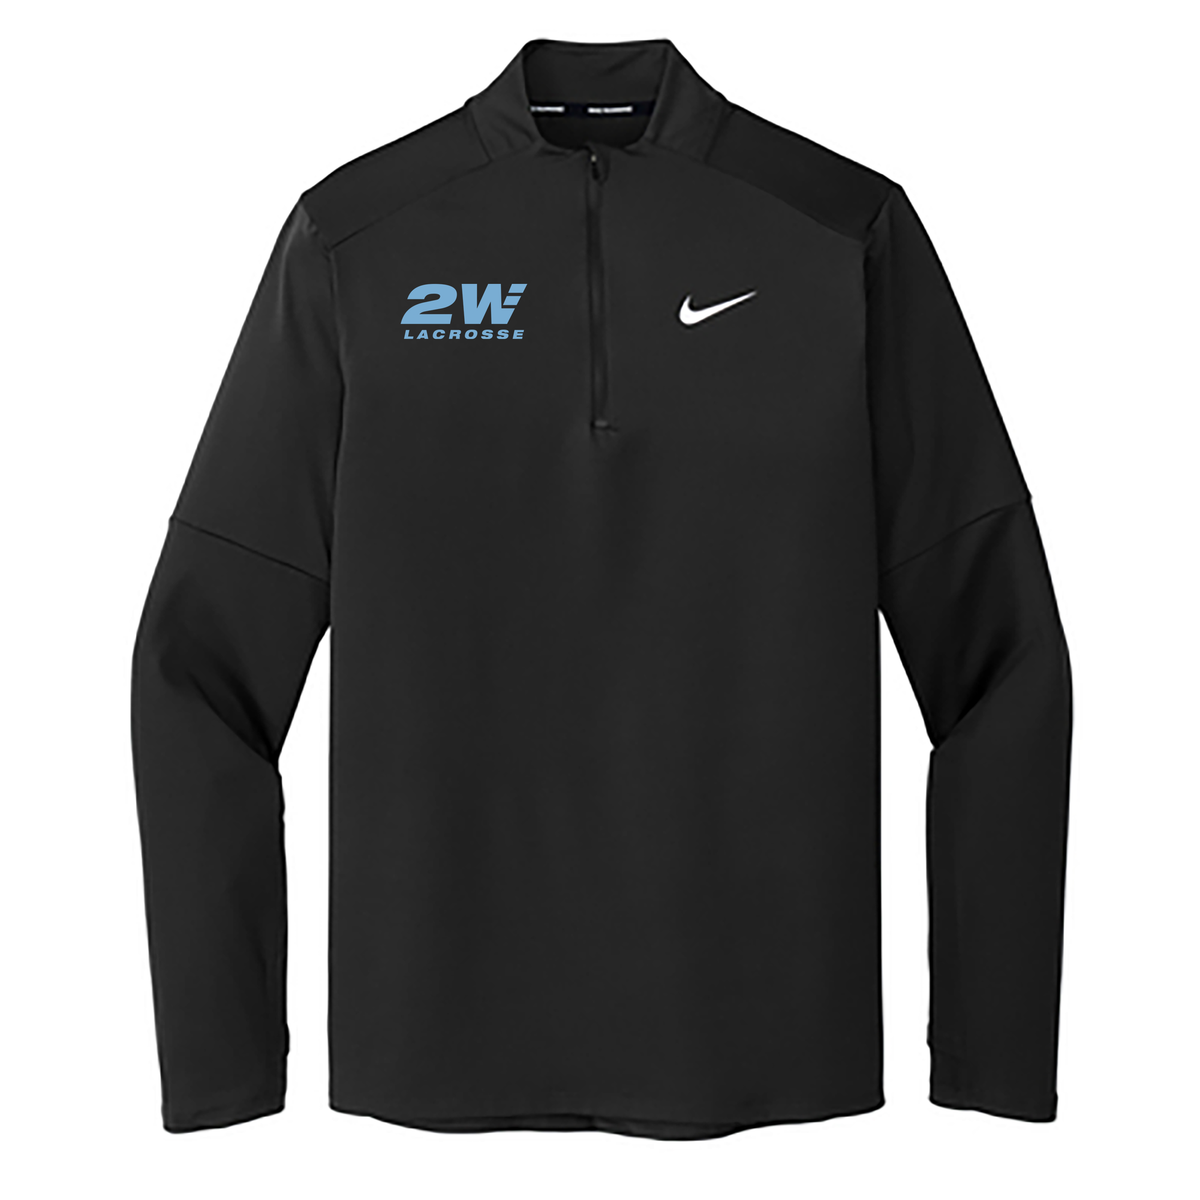 2Way Lacrosse Nike Dri-Fit Element 1/2 Zip